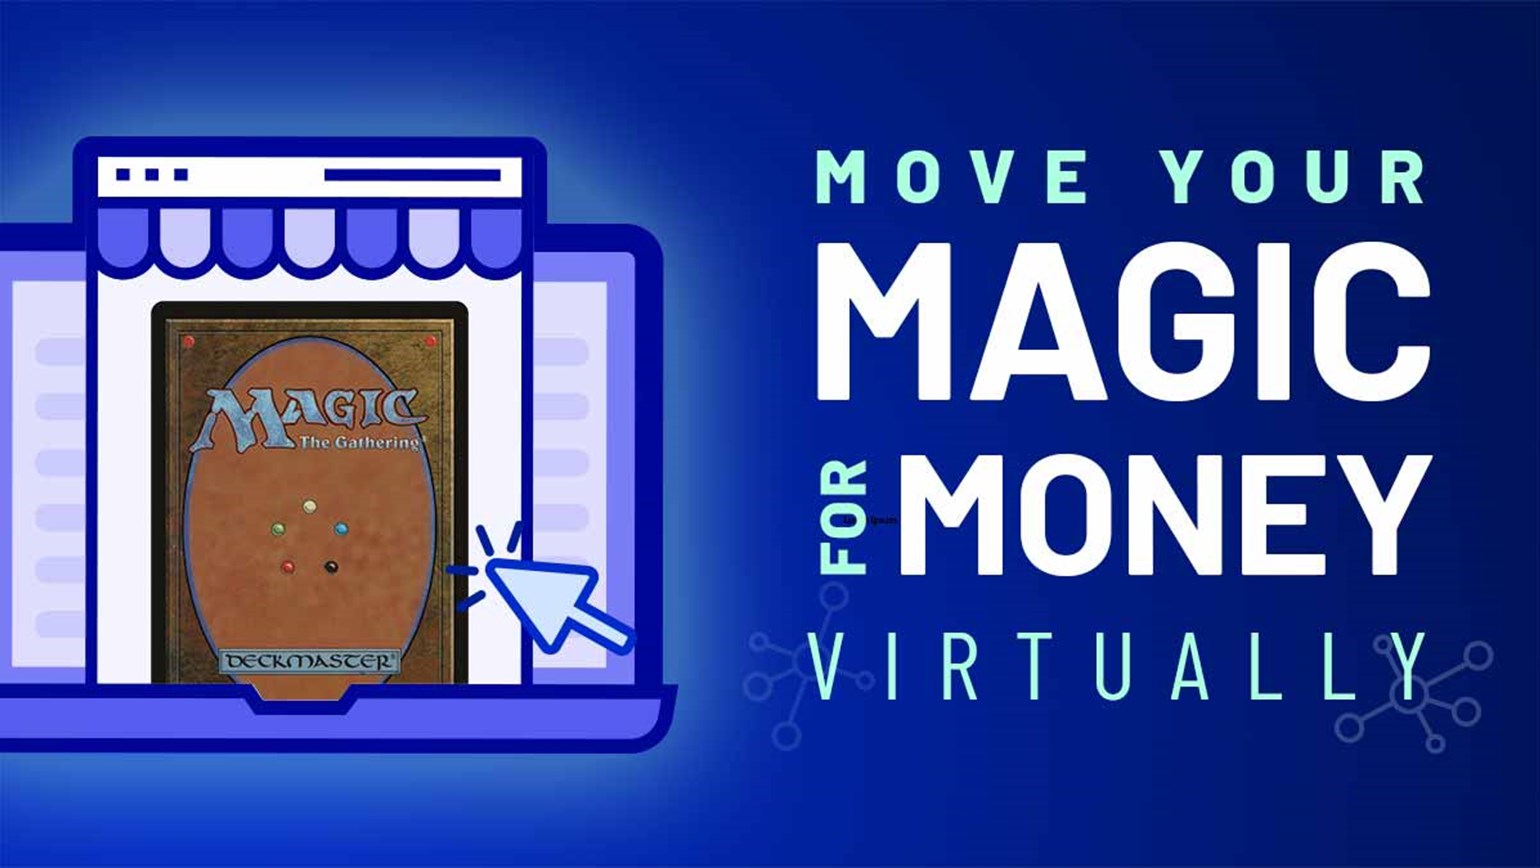 Move Your Magic